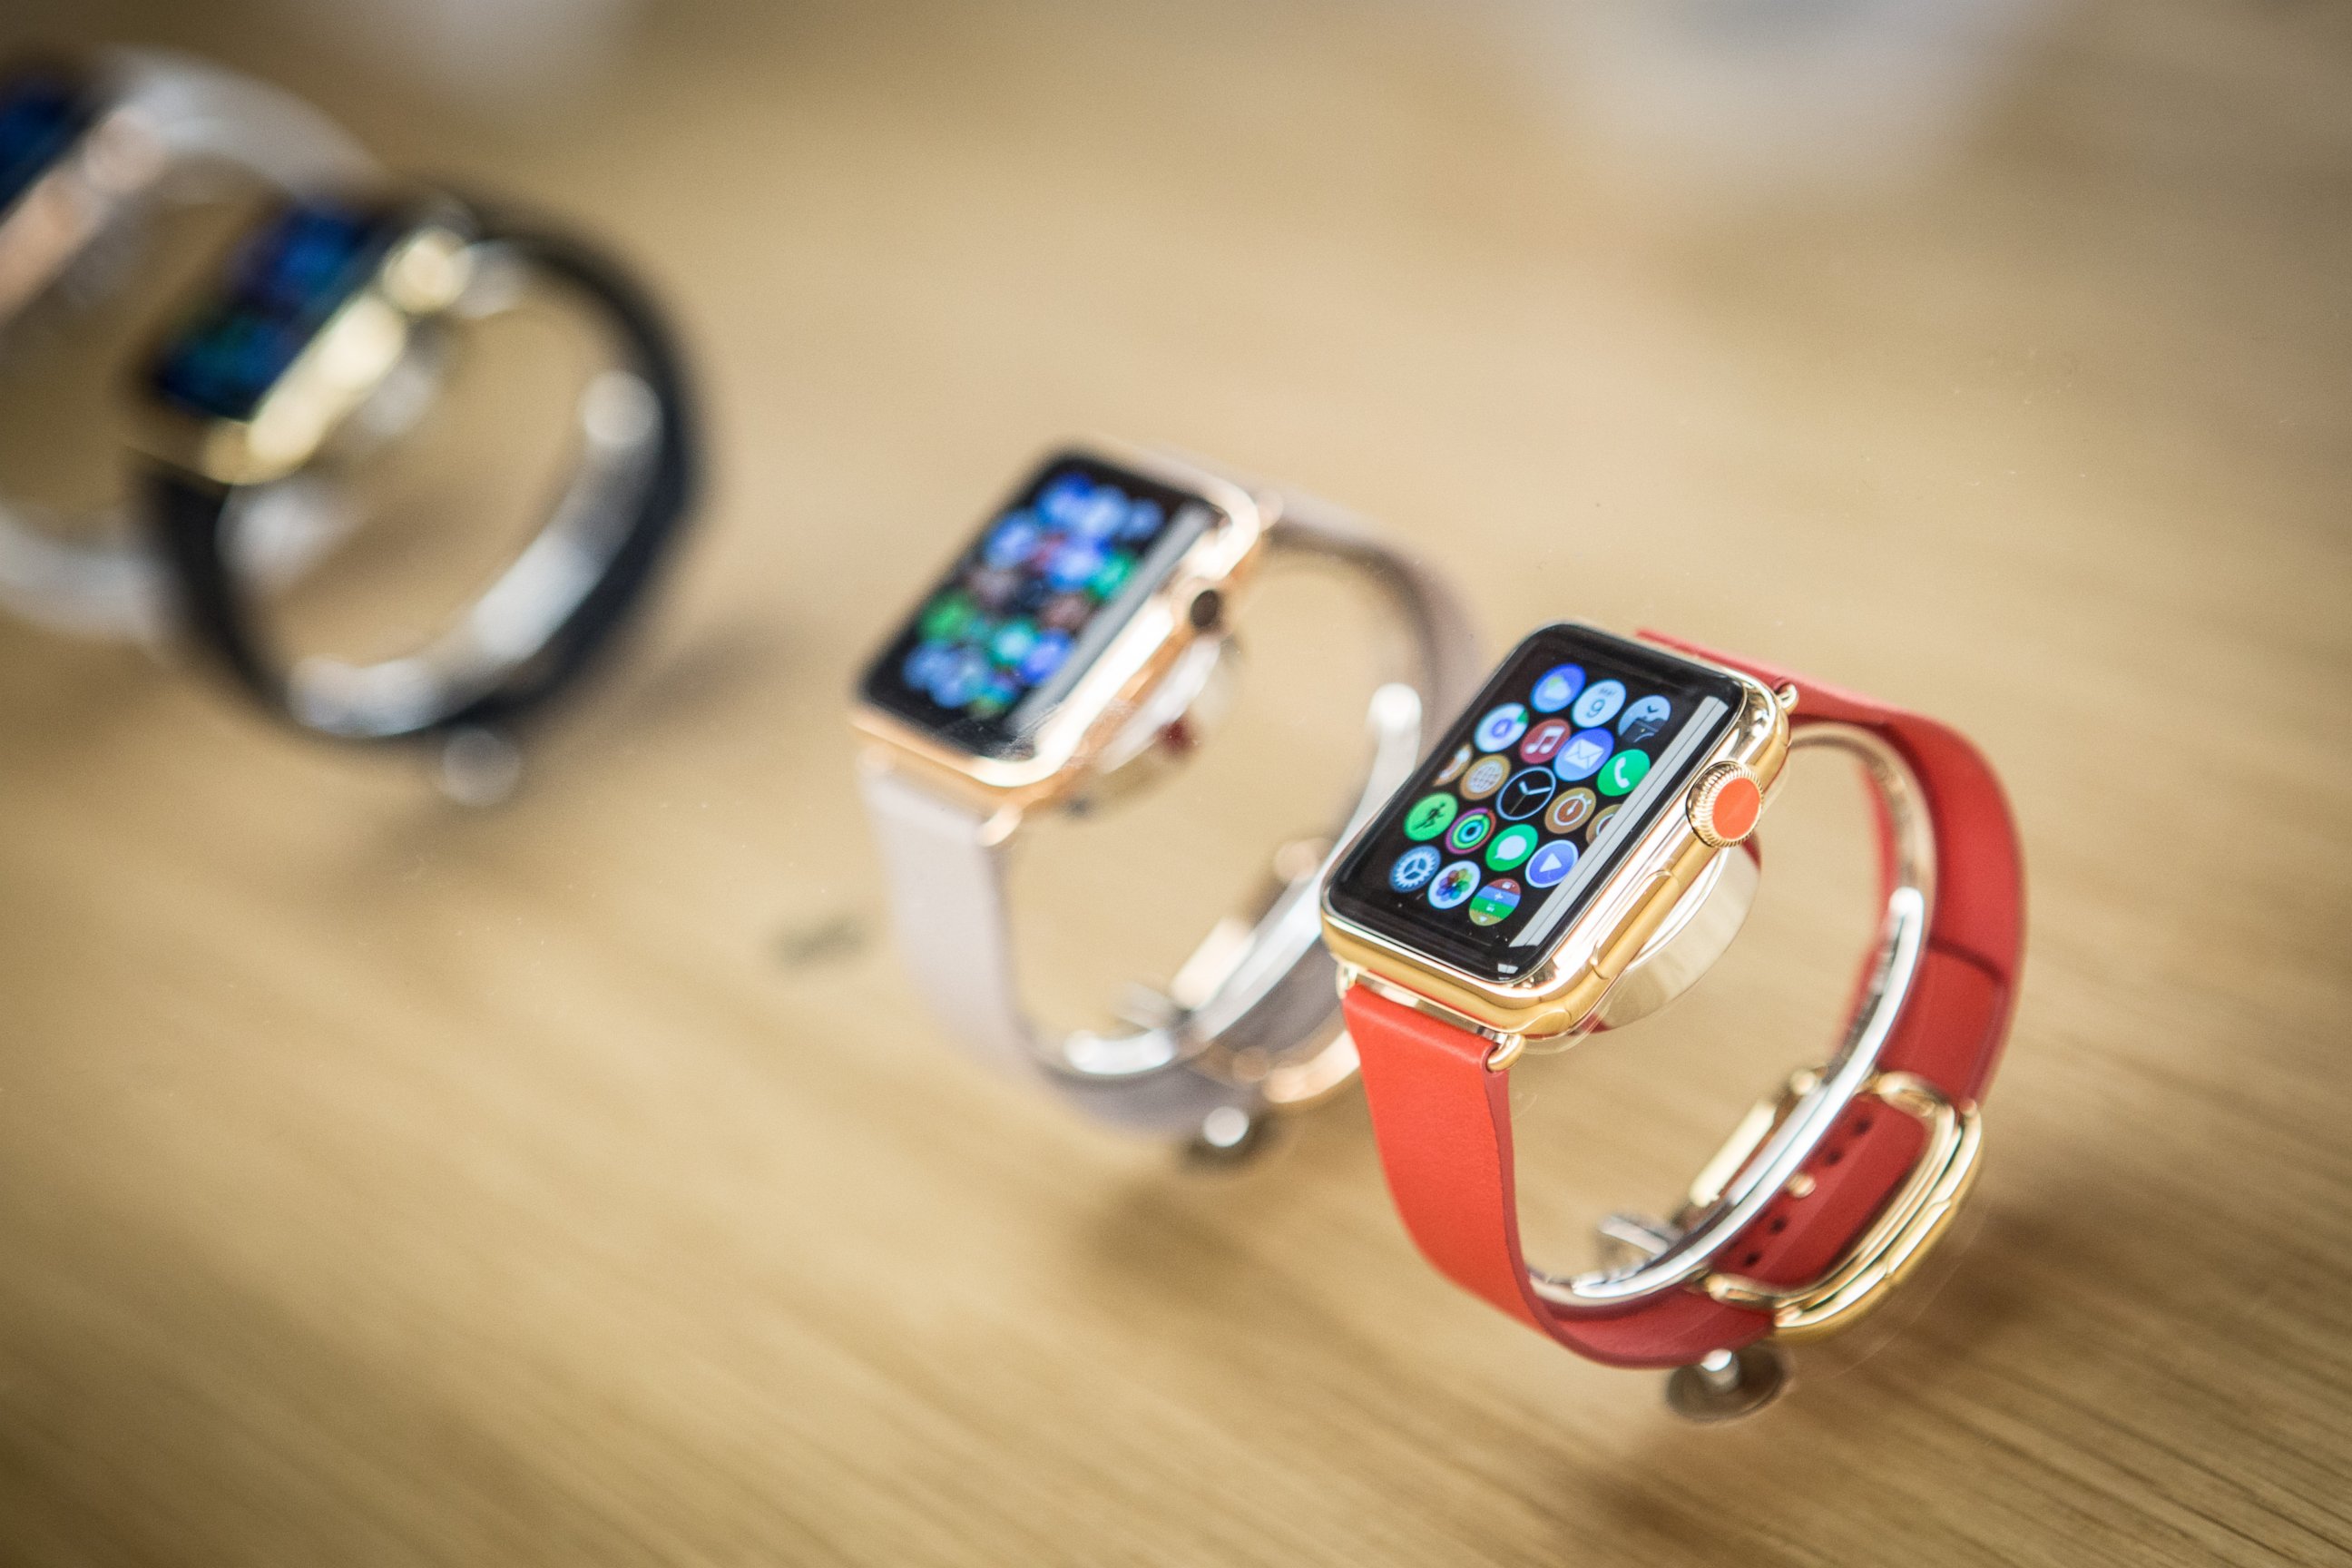 PHOTO: An Apple Watch on June 26, 2015 in Madrid, Spain.